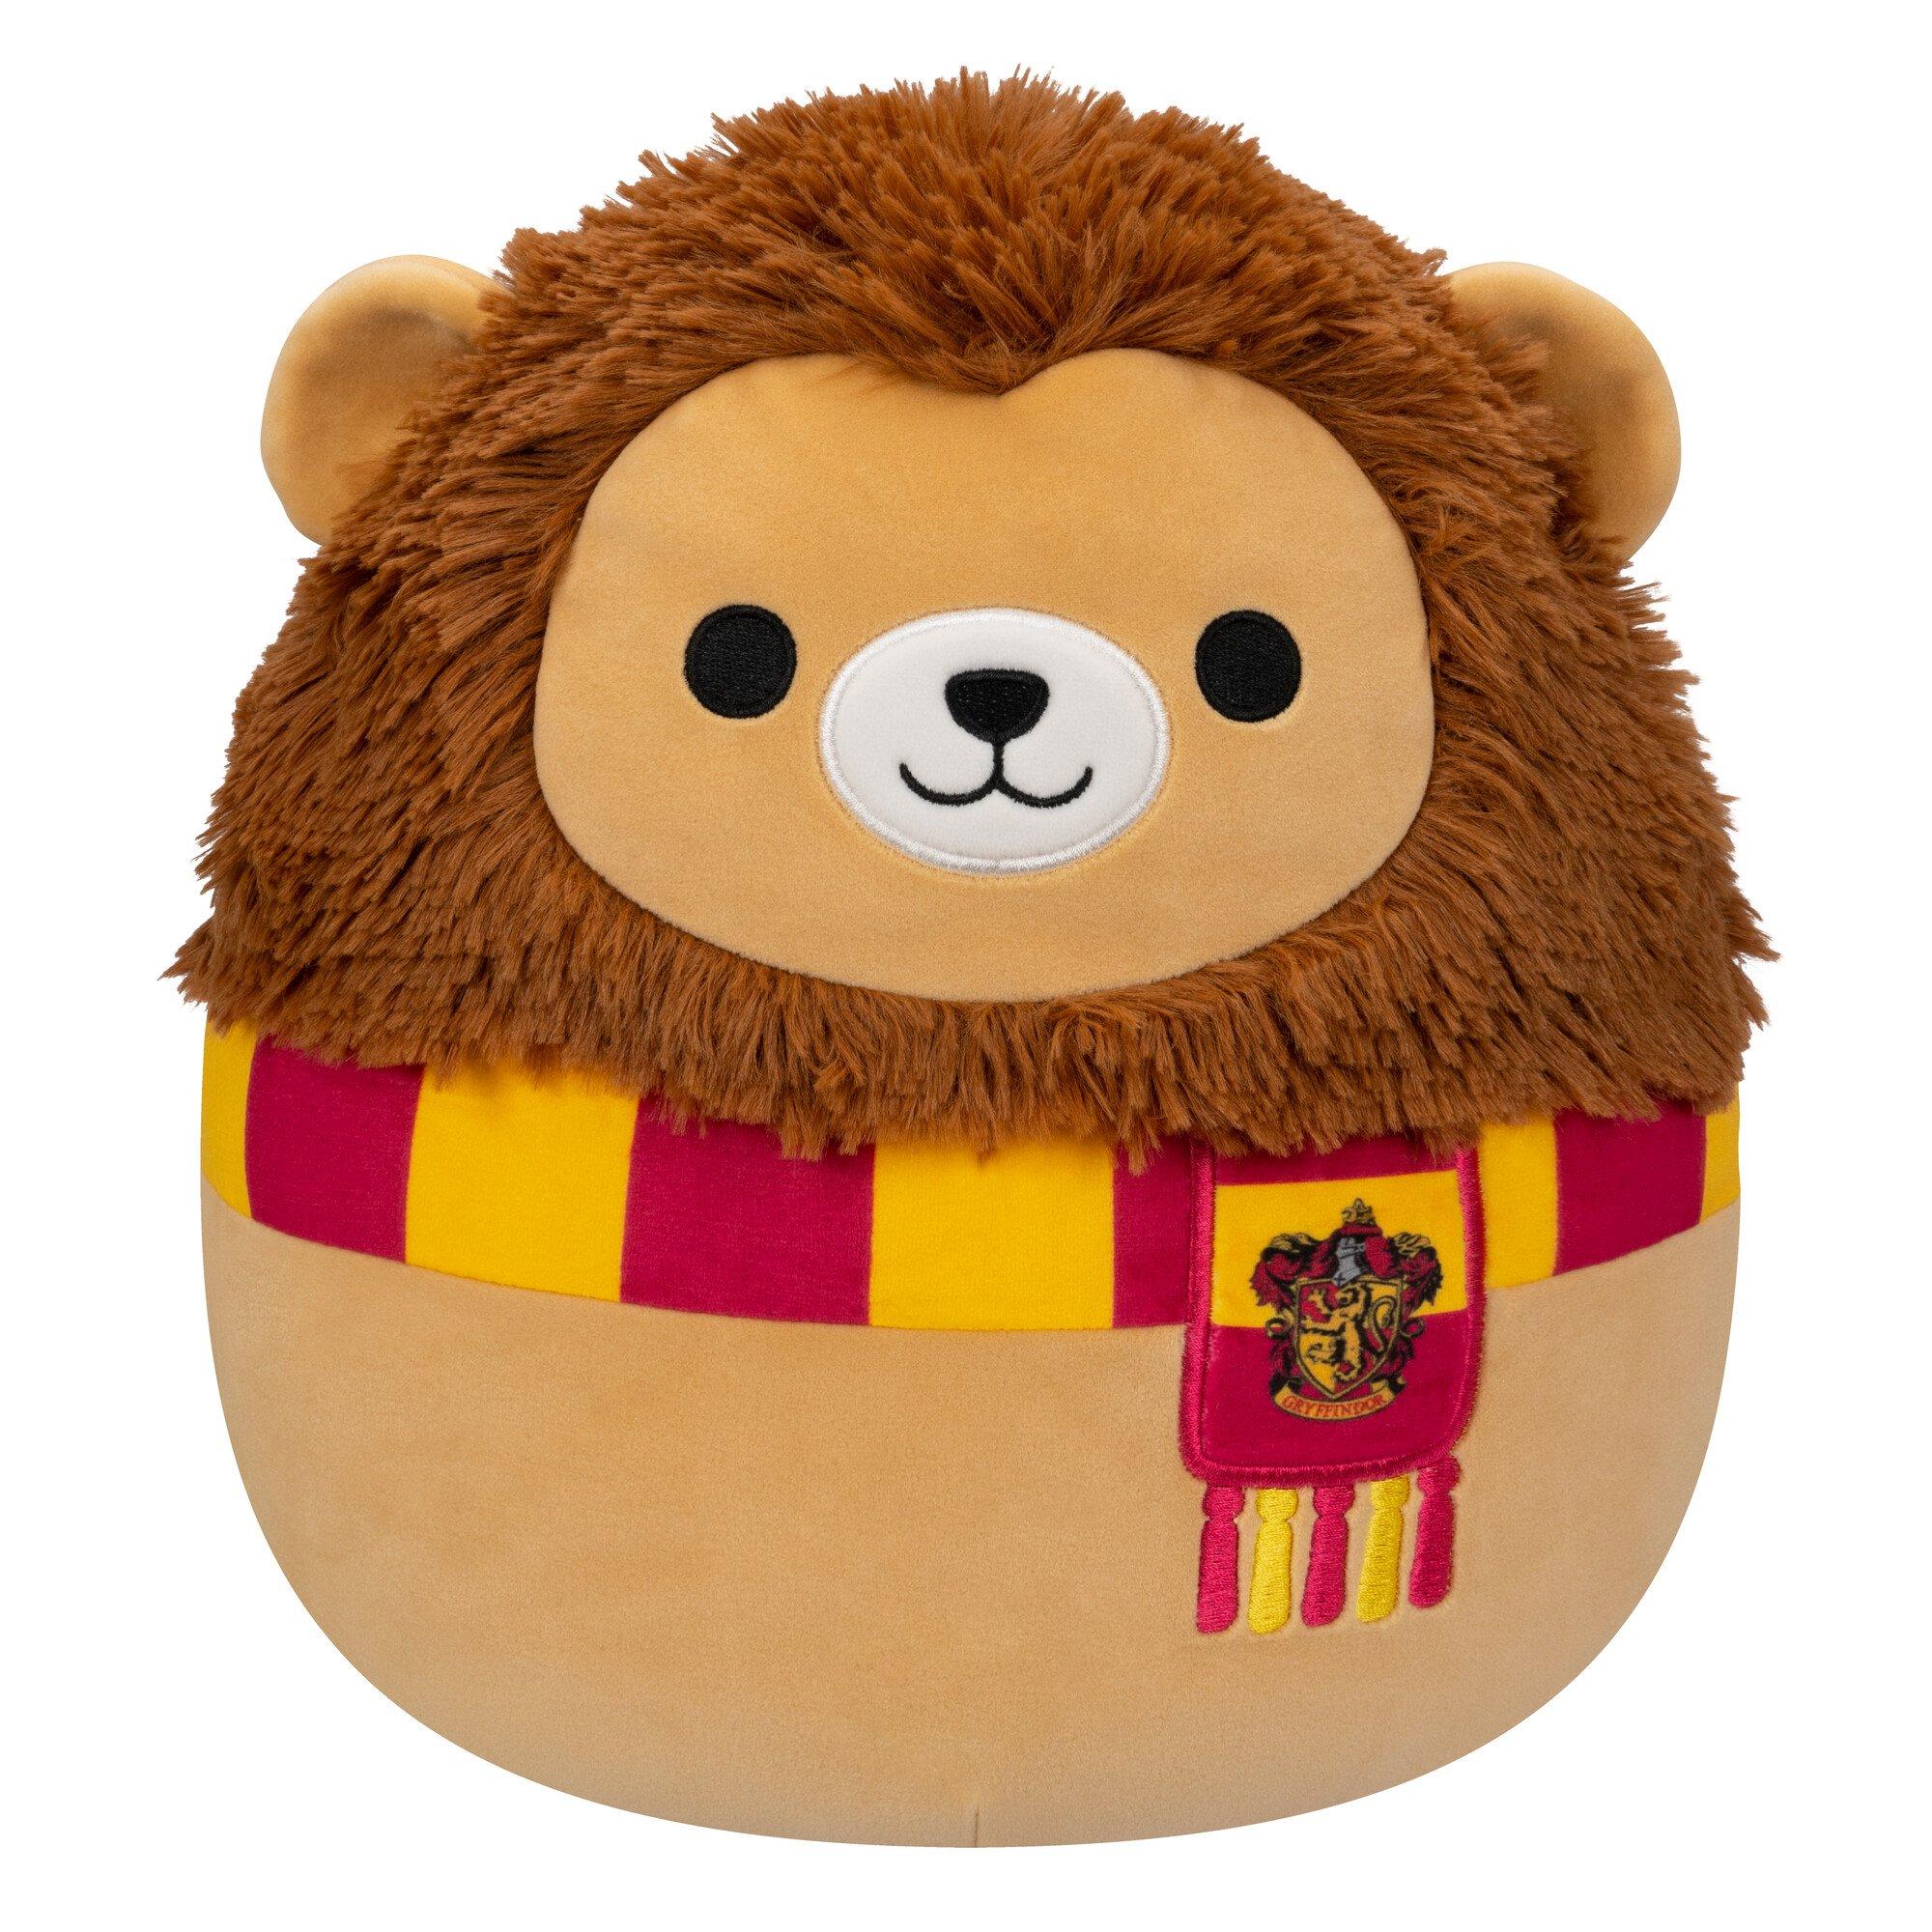 Harry Potter Stuffed Animals, Harry Potter Plush Toys, Model